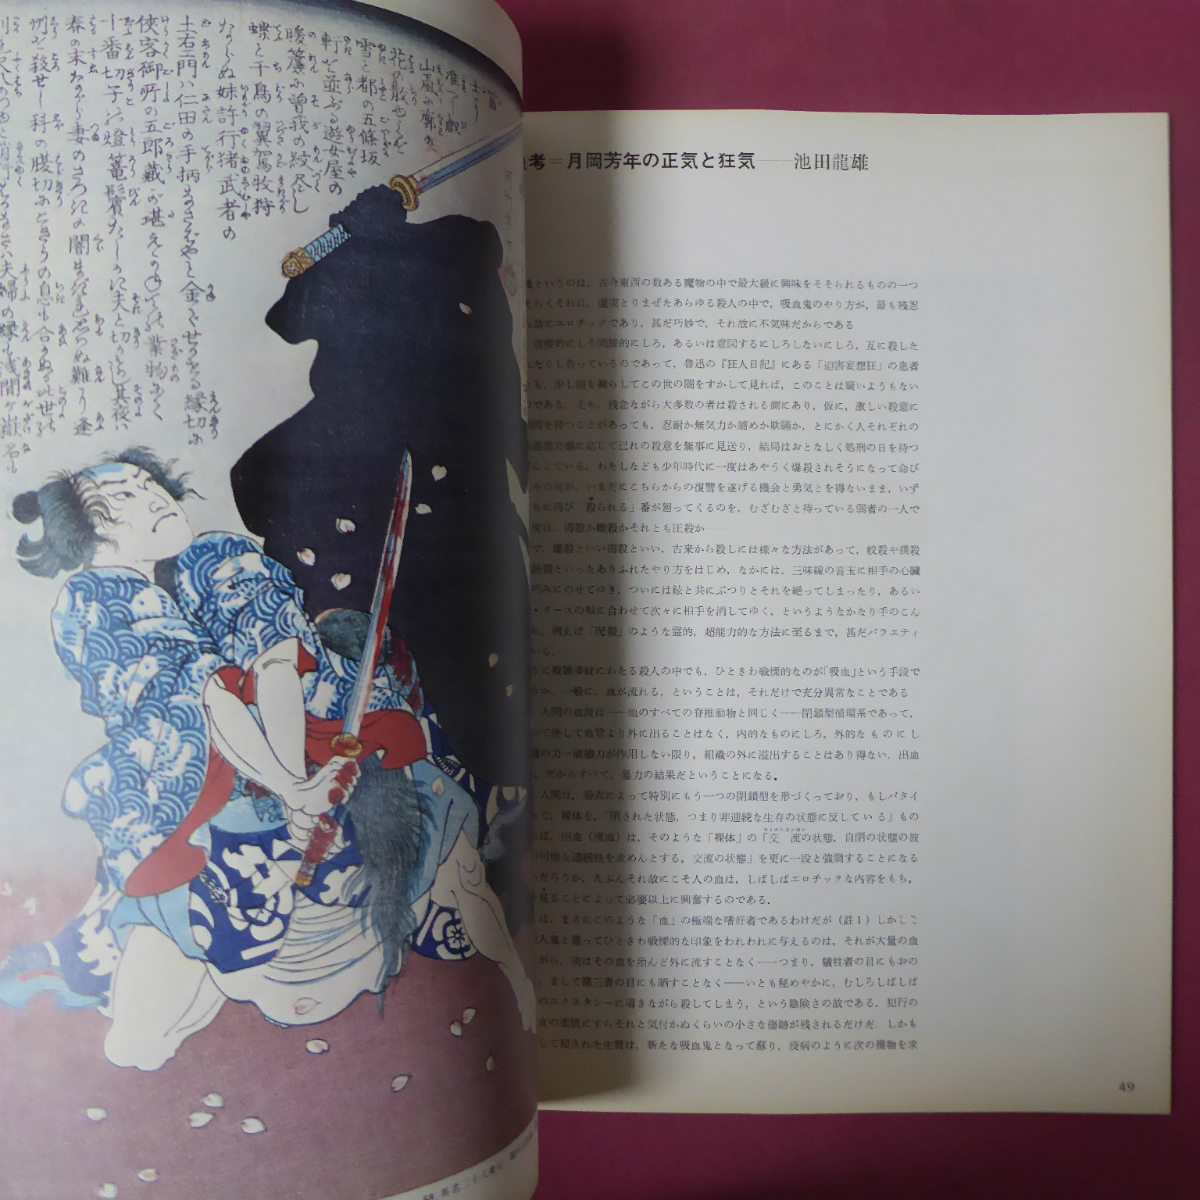 z25 fine art magazine [...][ special collection : Meiji. ukiyoe -. year * Kiyoshi parent * country ./. waste .. .. proof /...- month hill . year. regular .. madness / Meiji woodcut ]